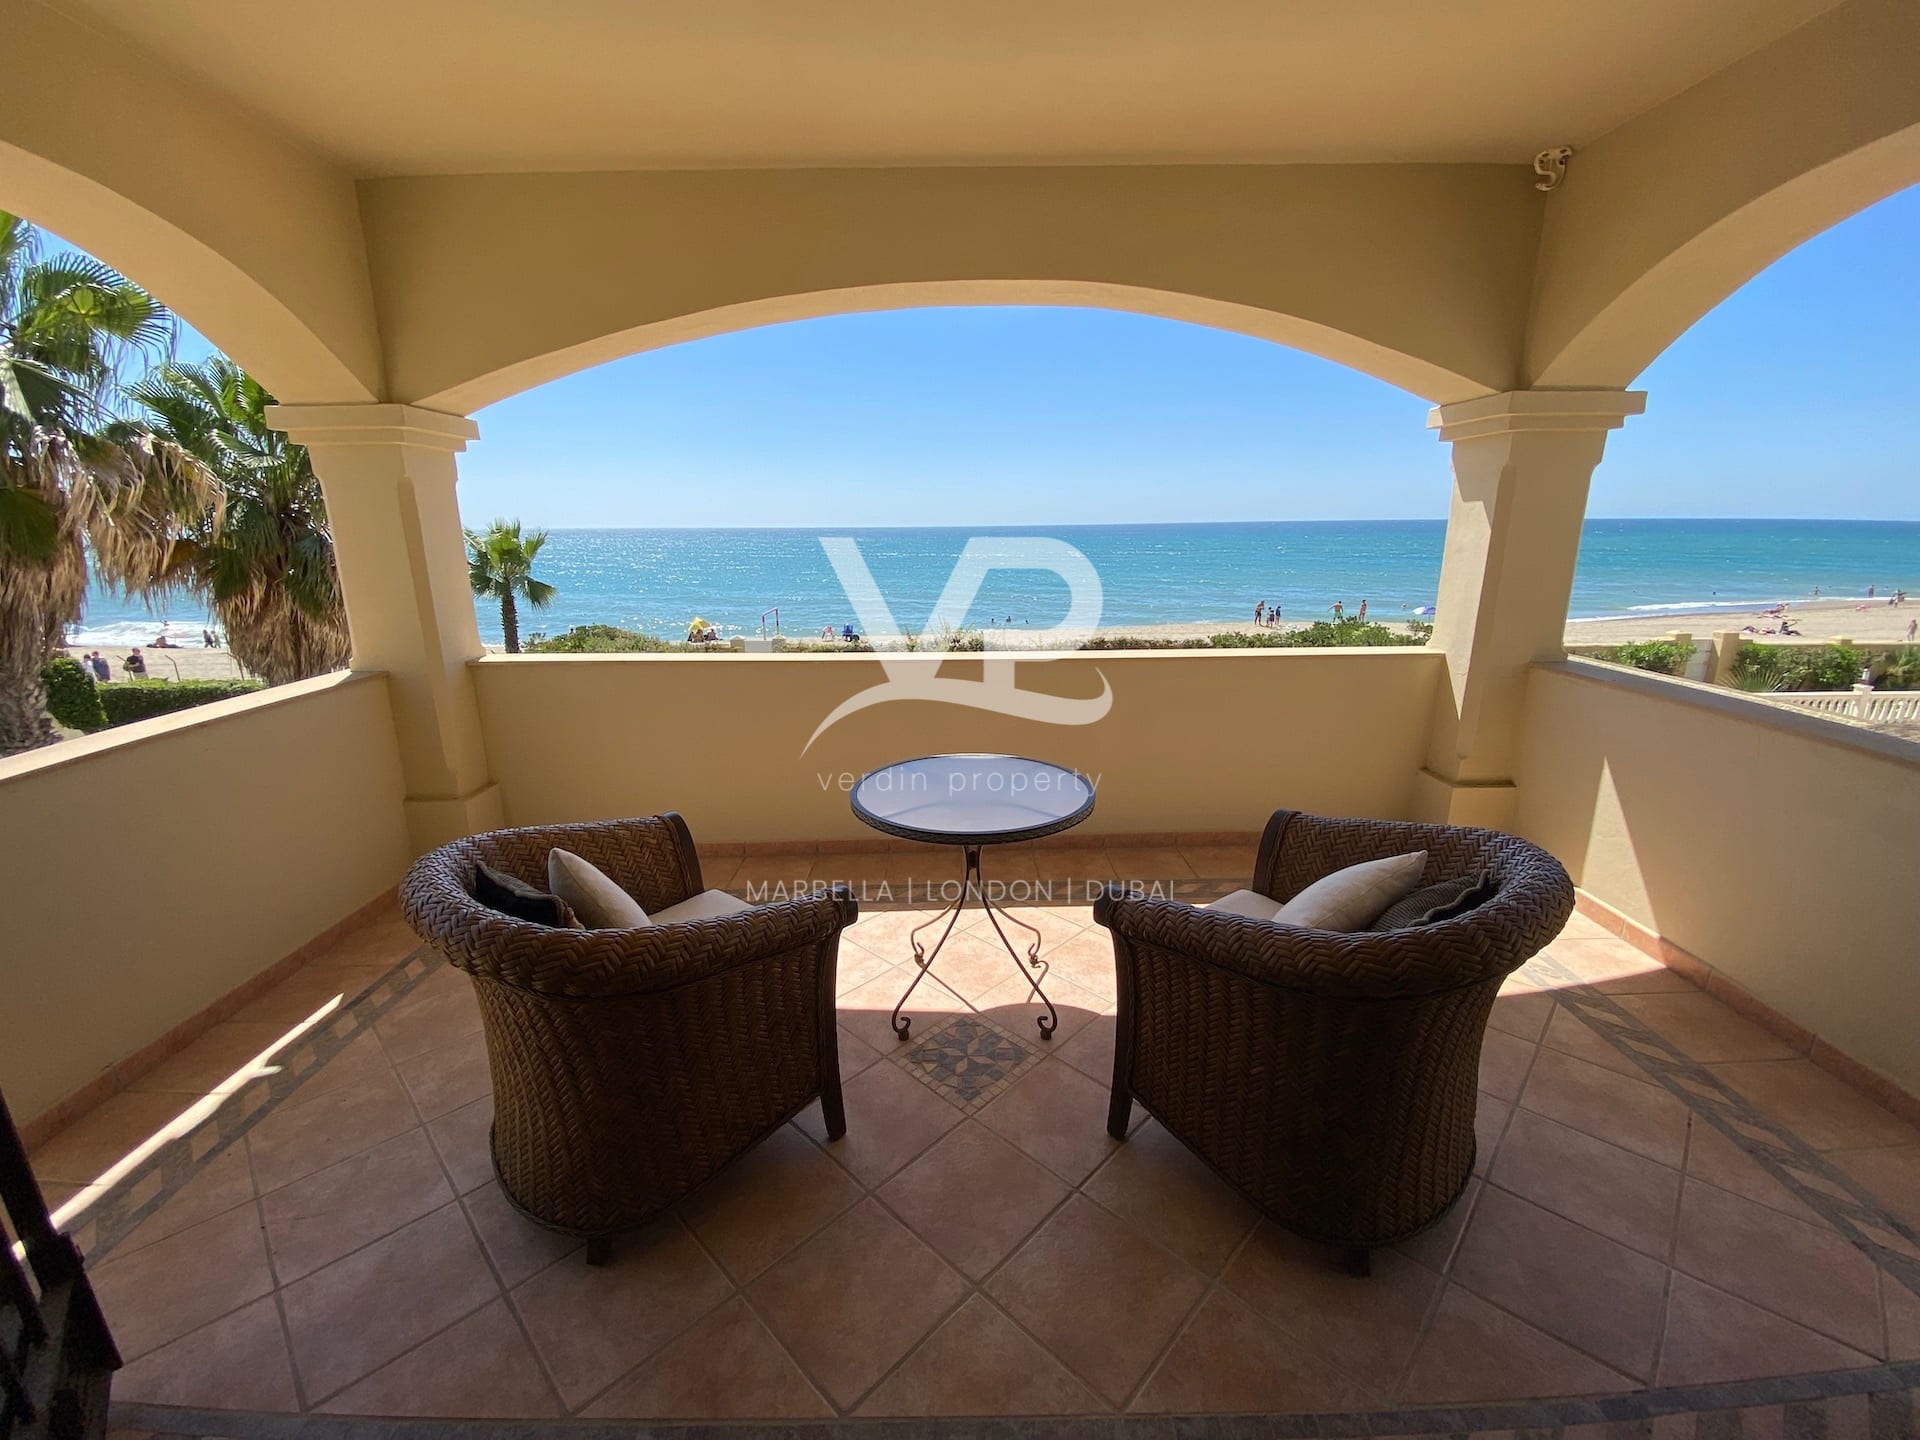 La Cala beach villa - Verdin Property